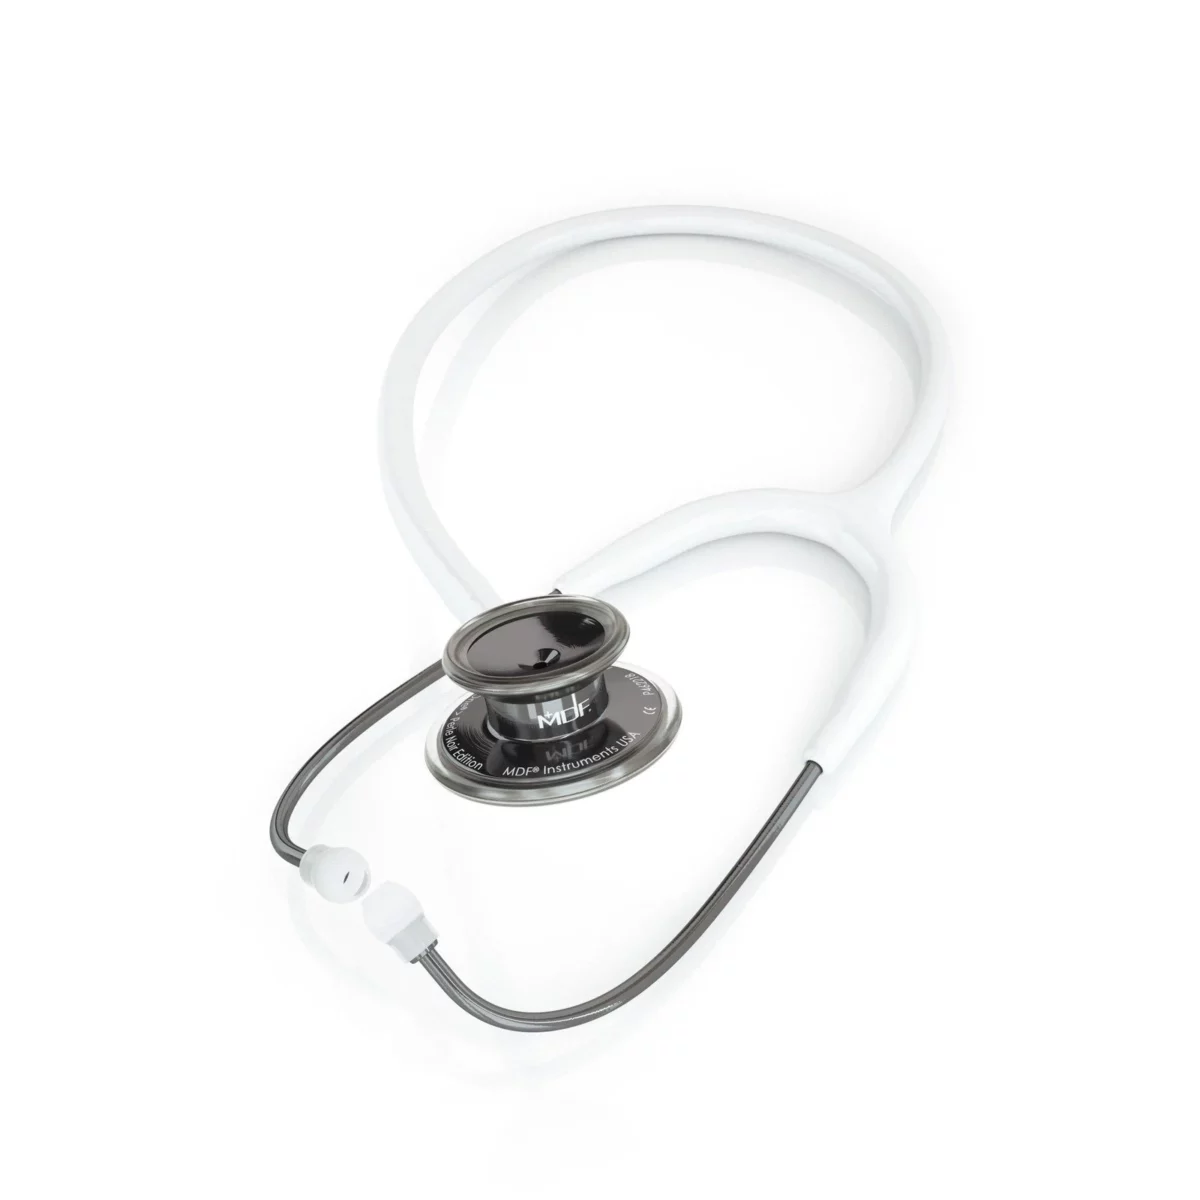 Mdf stethoscope: md one - white/perla noire